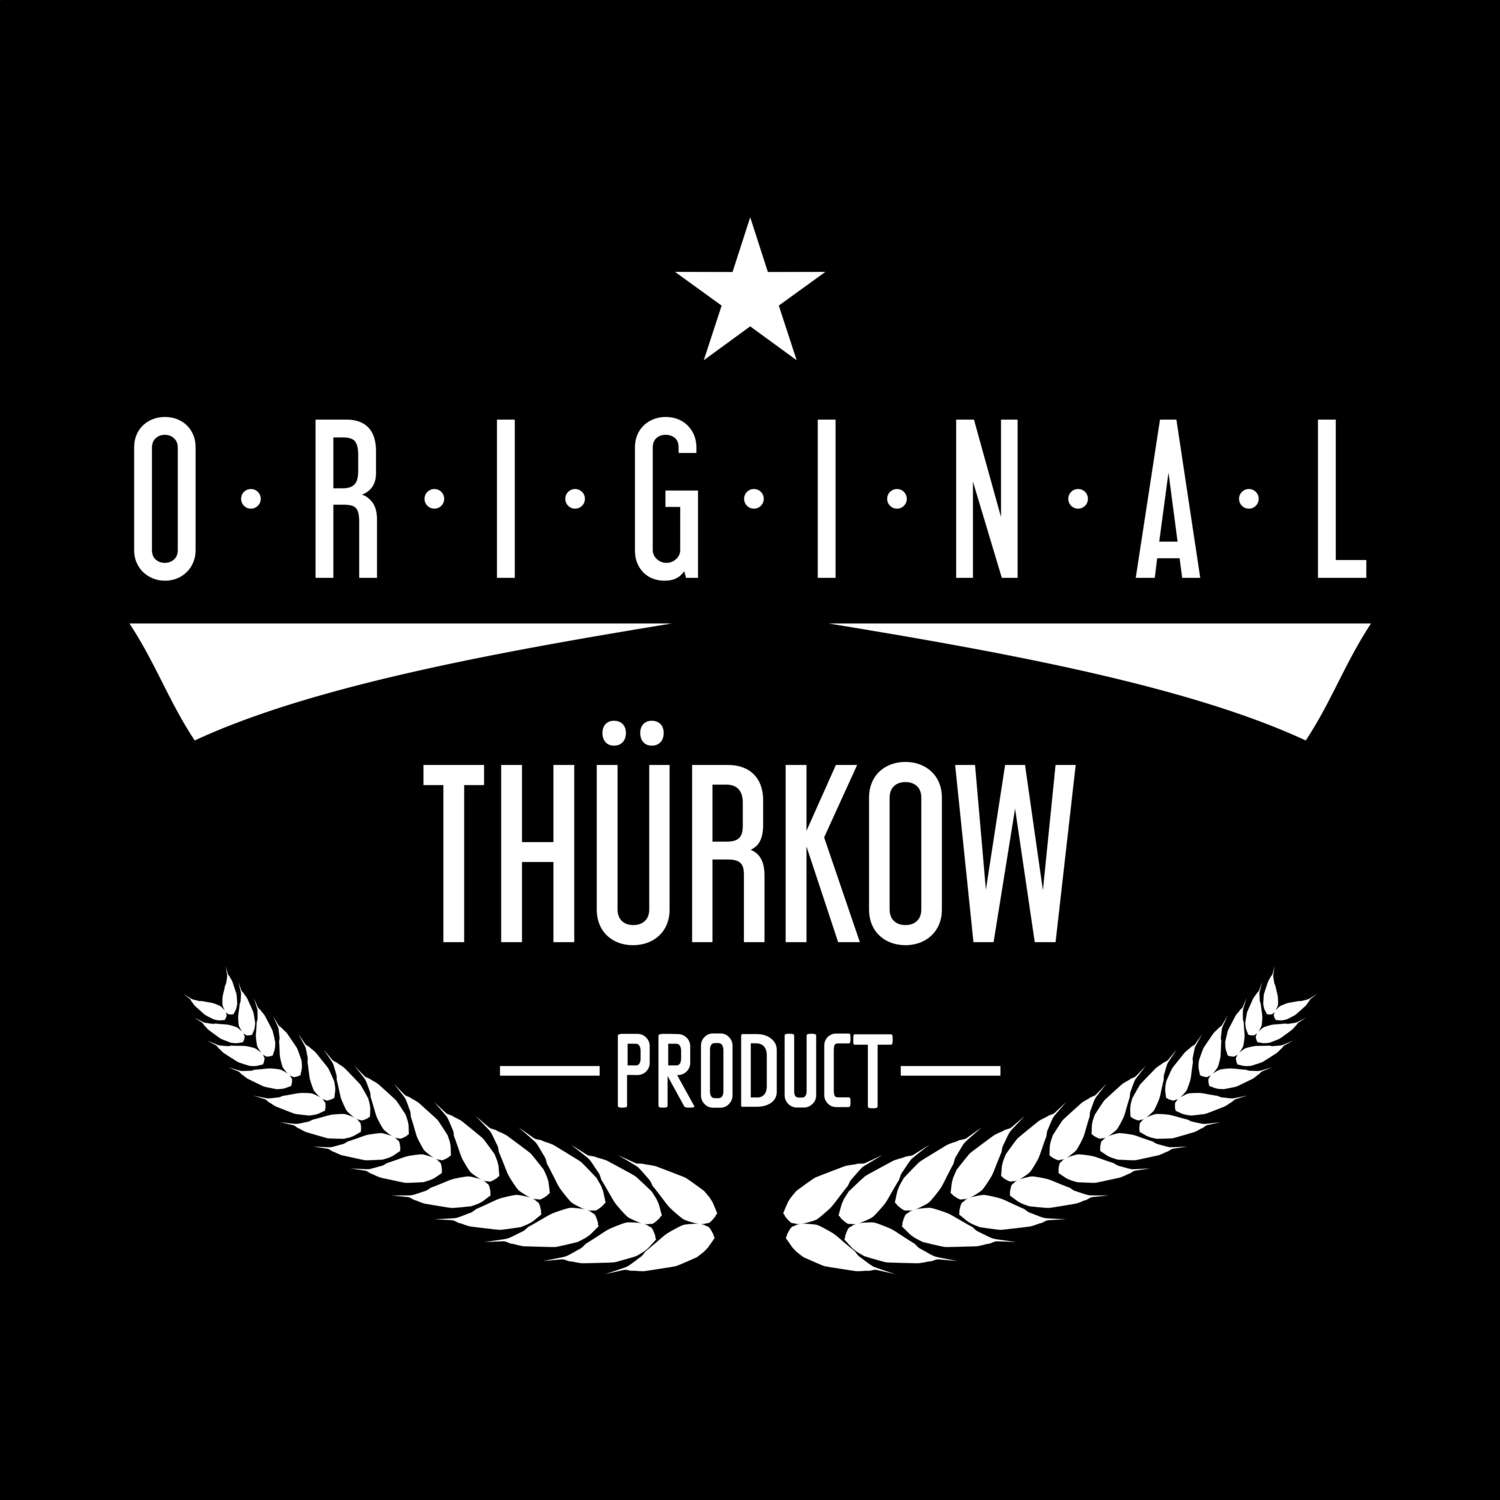 Thürkow T-Shirt »Original Product«